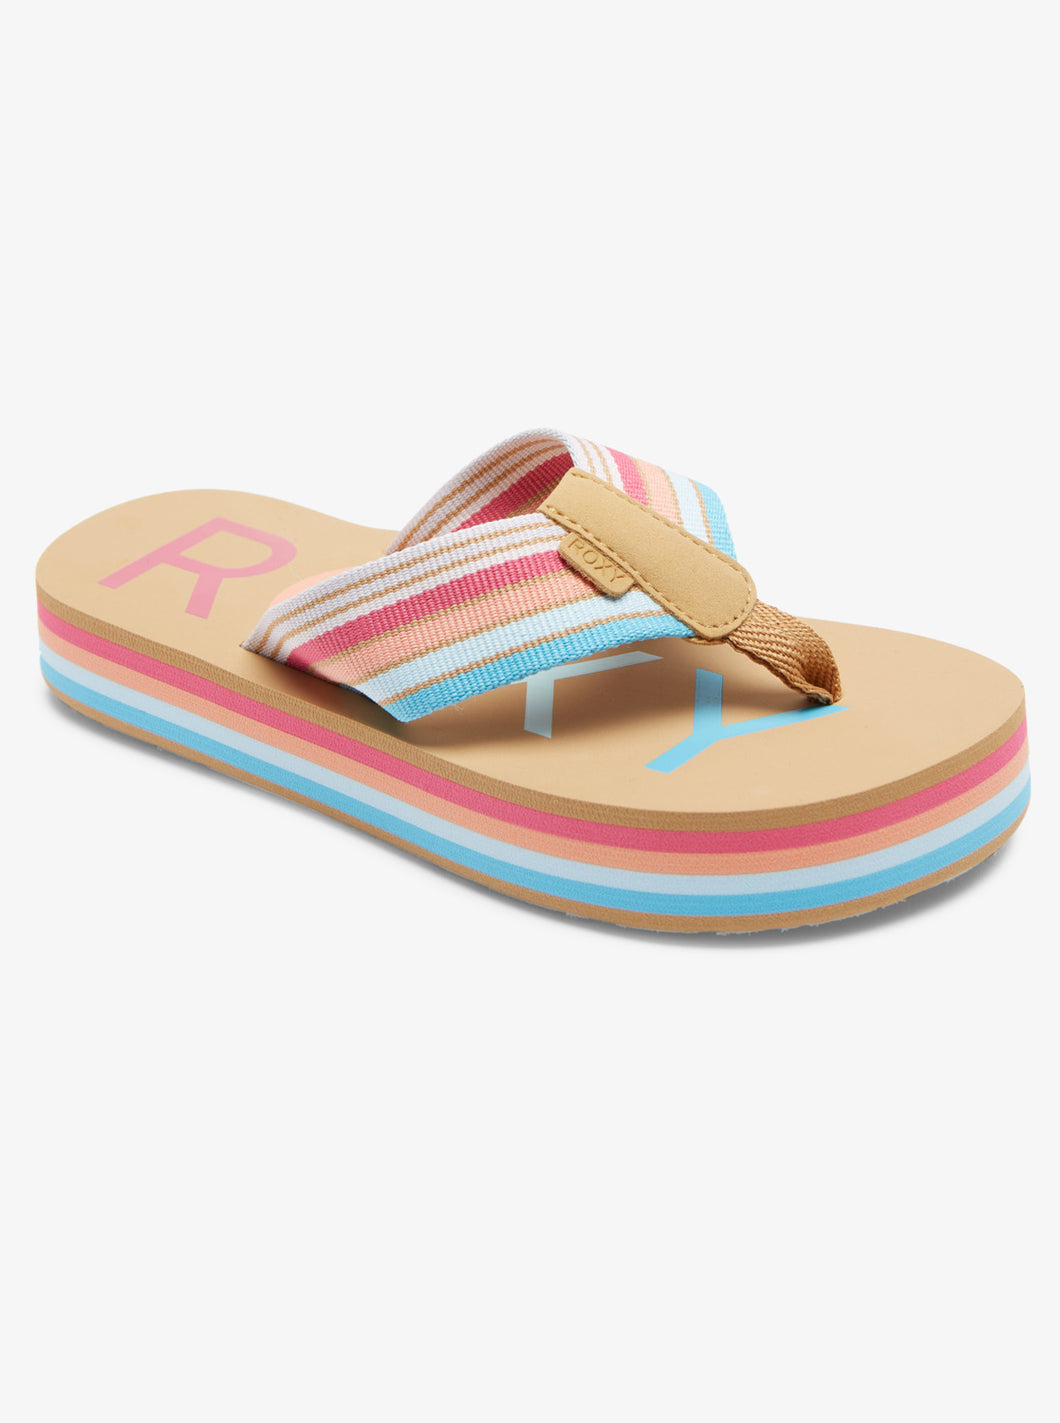 Roxy Girl “Chika Hi” Striped Flip Flops : Size 13 to 5